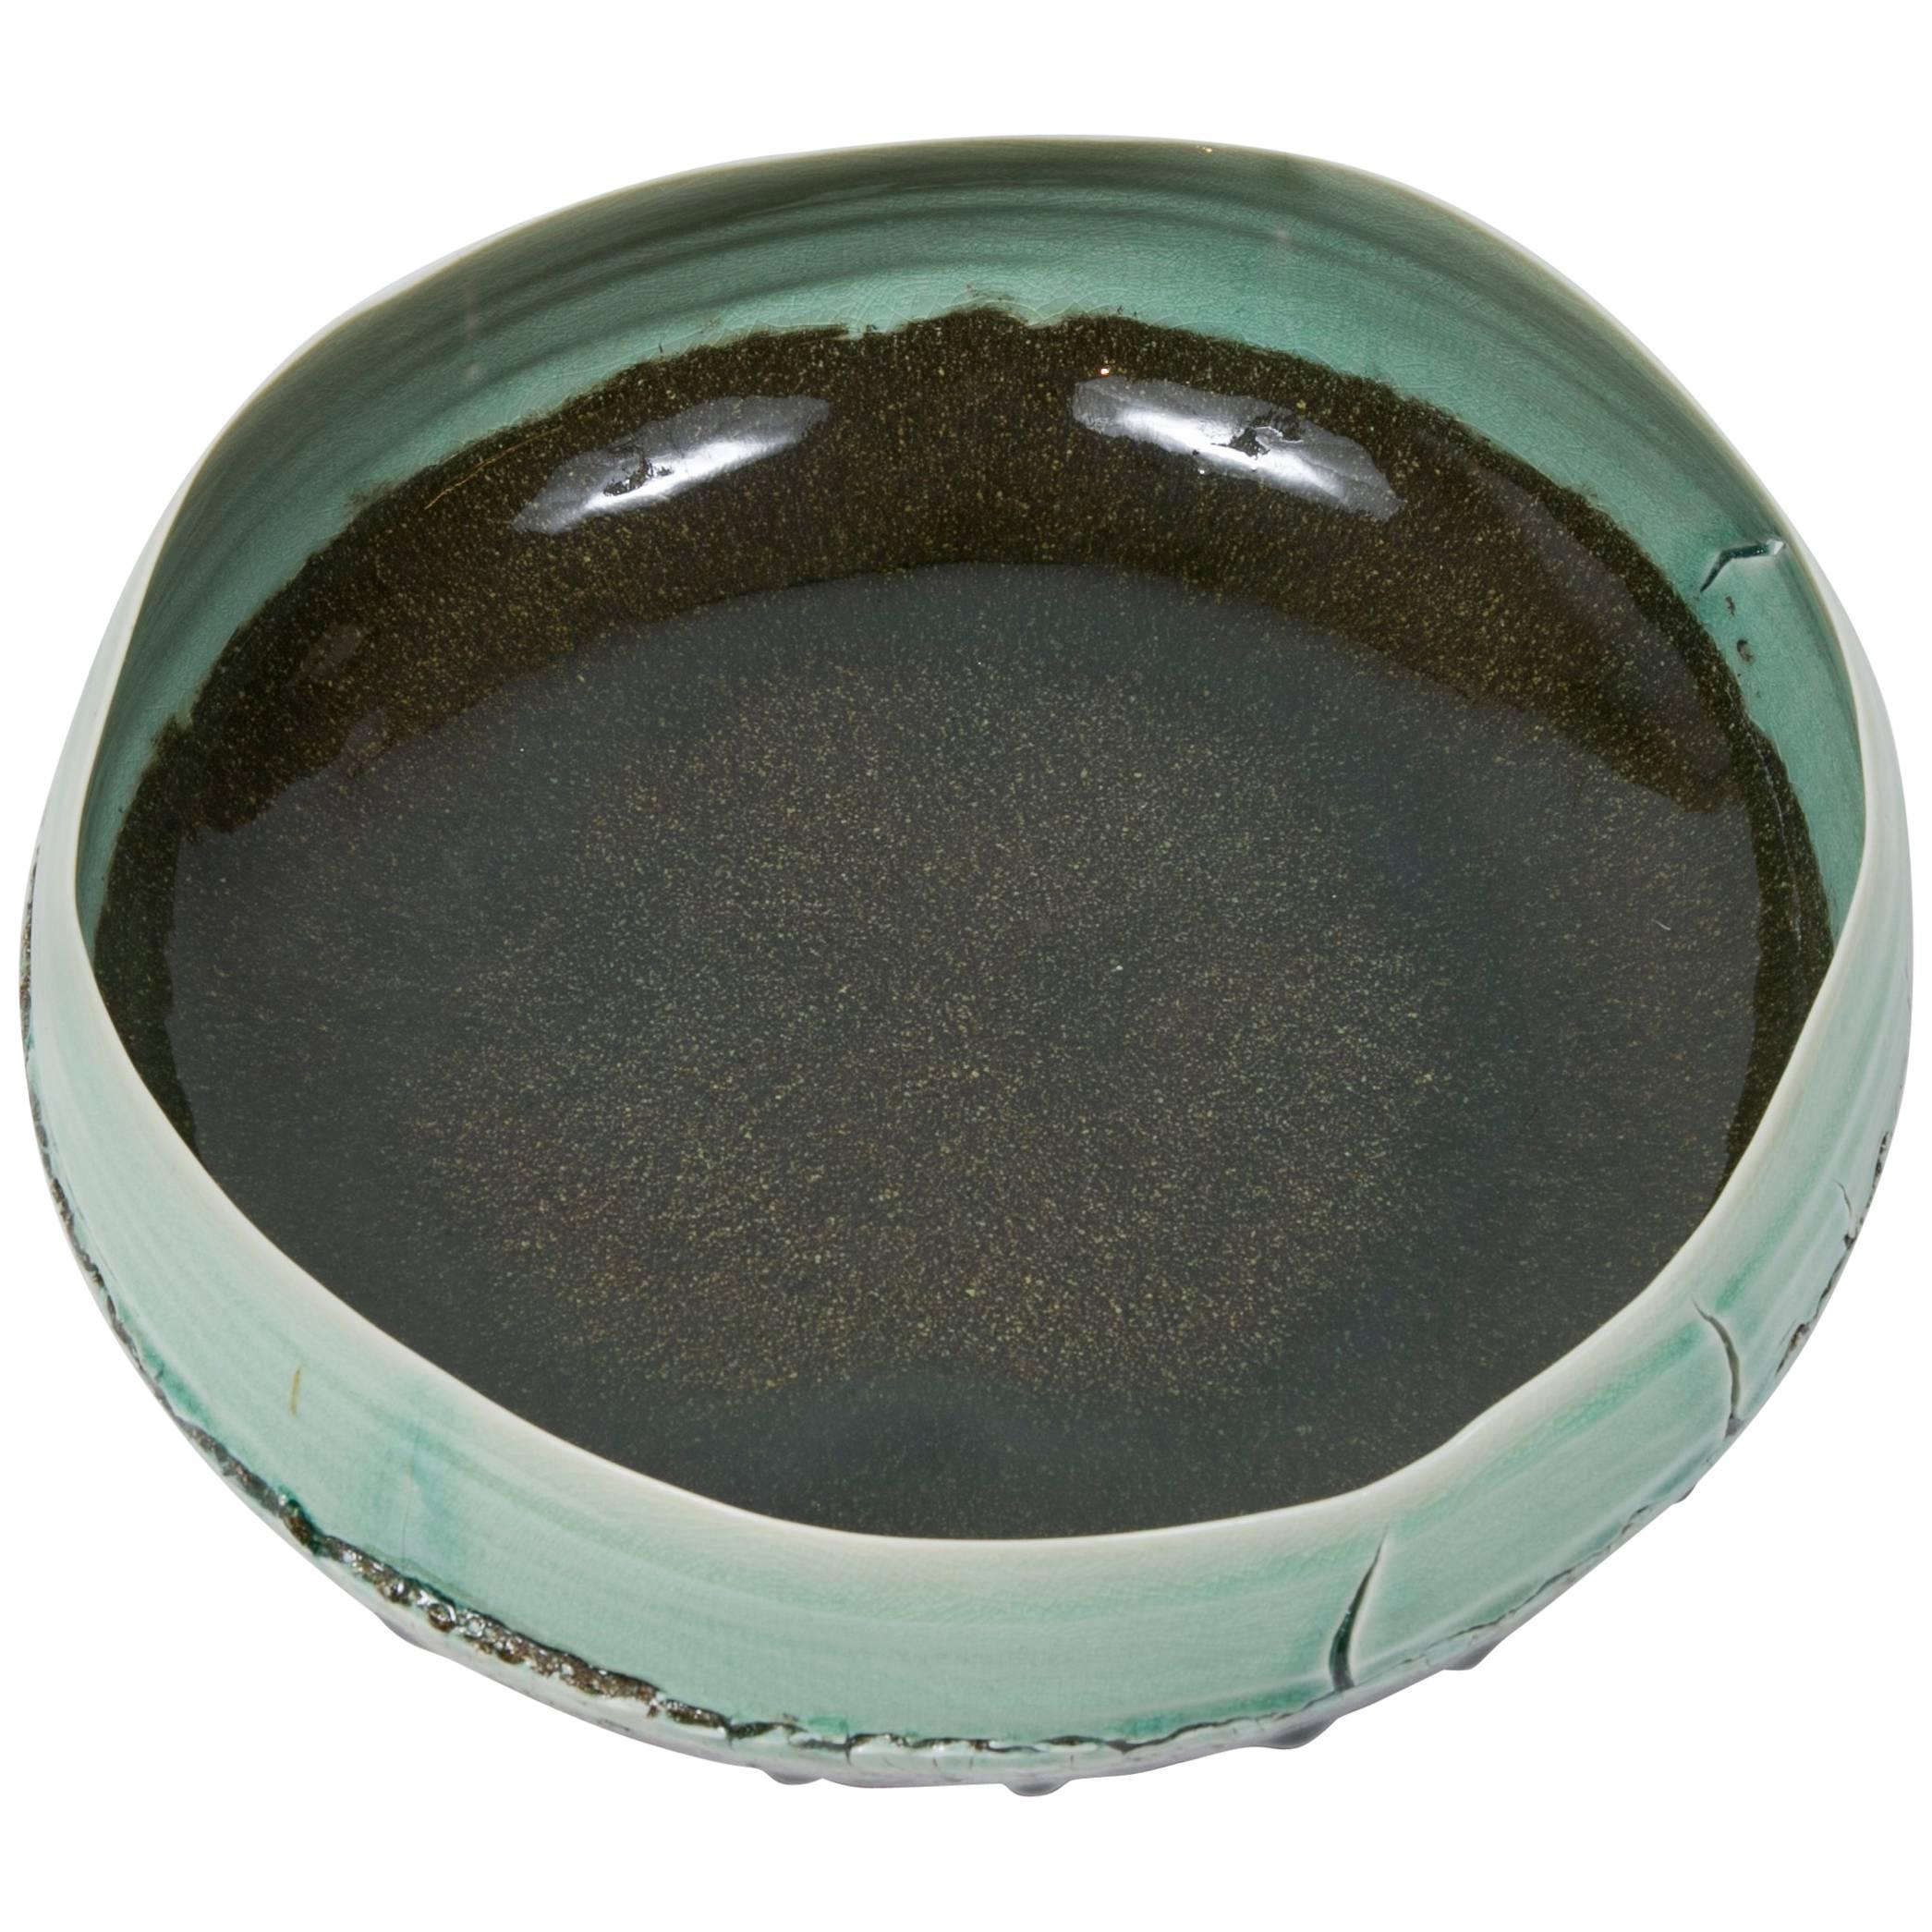 Enameled Ceramic Bowl by Joan Serra